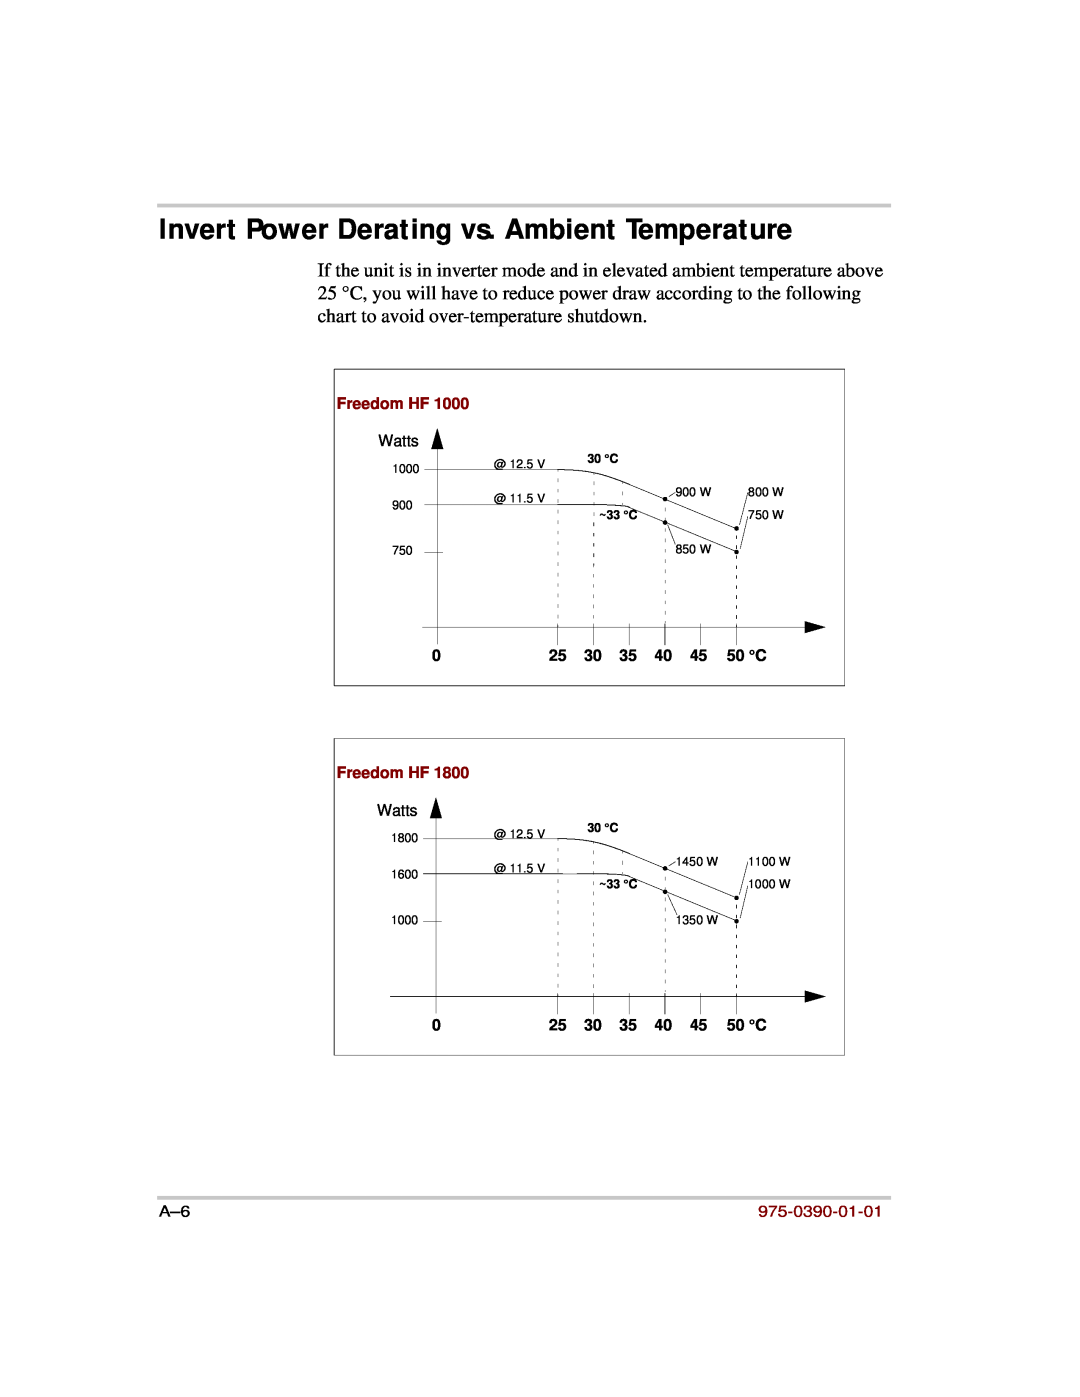 Xantrex Technology HF 1000 Invert Power Derating vs. Ambient Temperature, 975-0390-01-01, Freedom HF, 50 C, 30 C, ~33 C 